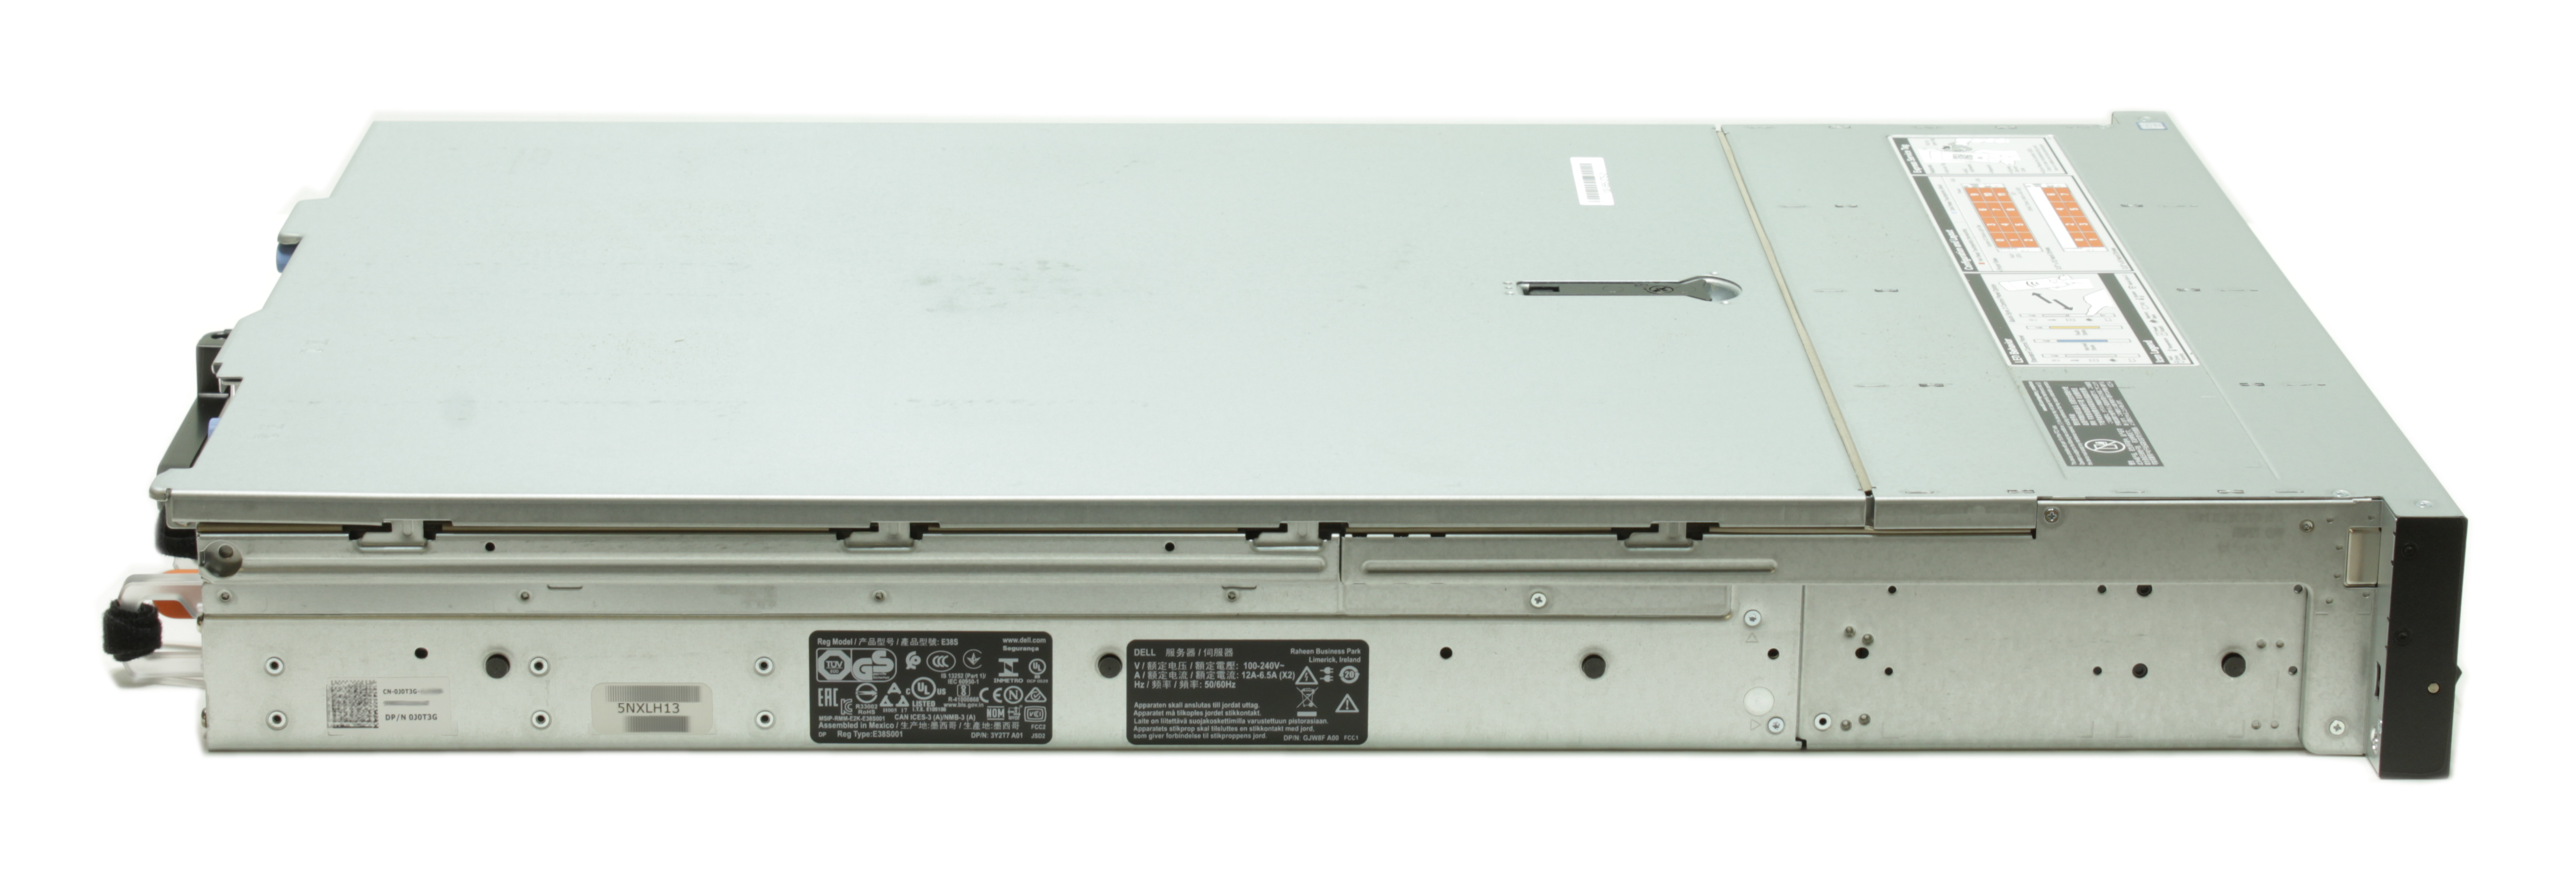 Dell EMC PowerProtect DP4400 PowerEdge Server RX740 12 Bay Metal Chassis J0T3G 5NXLH13